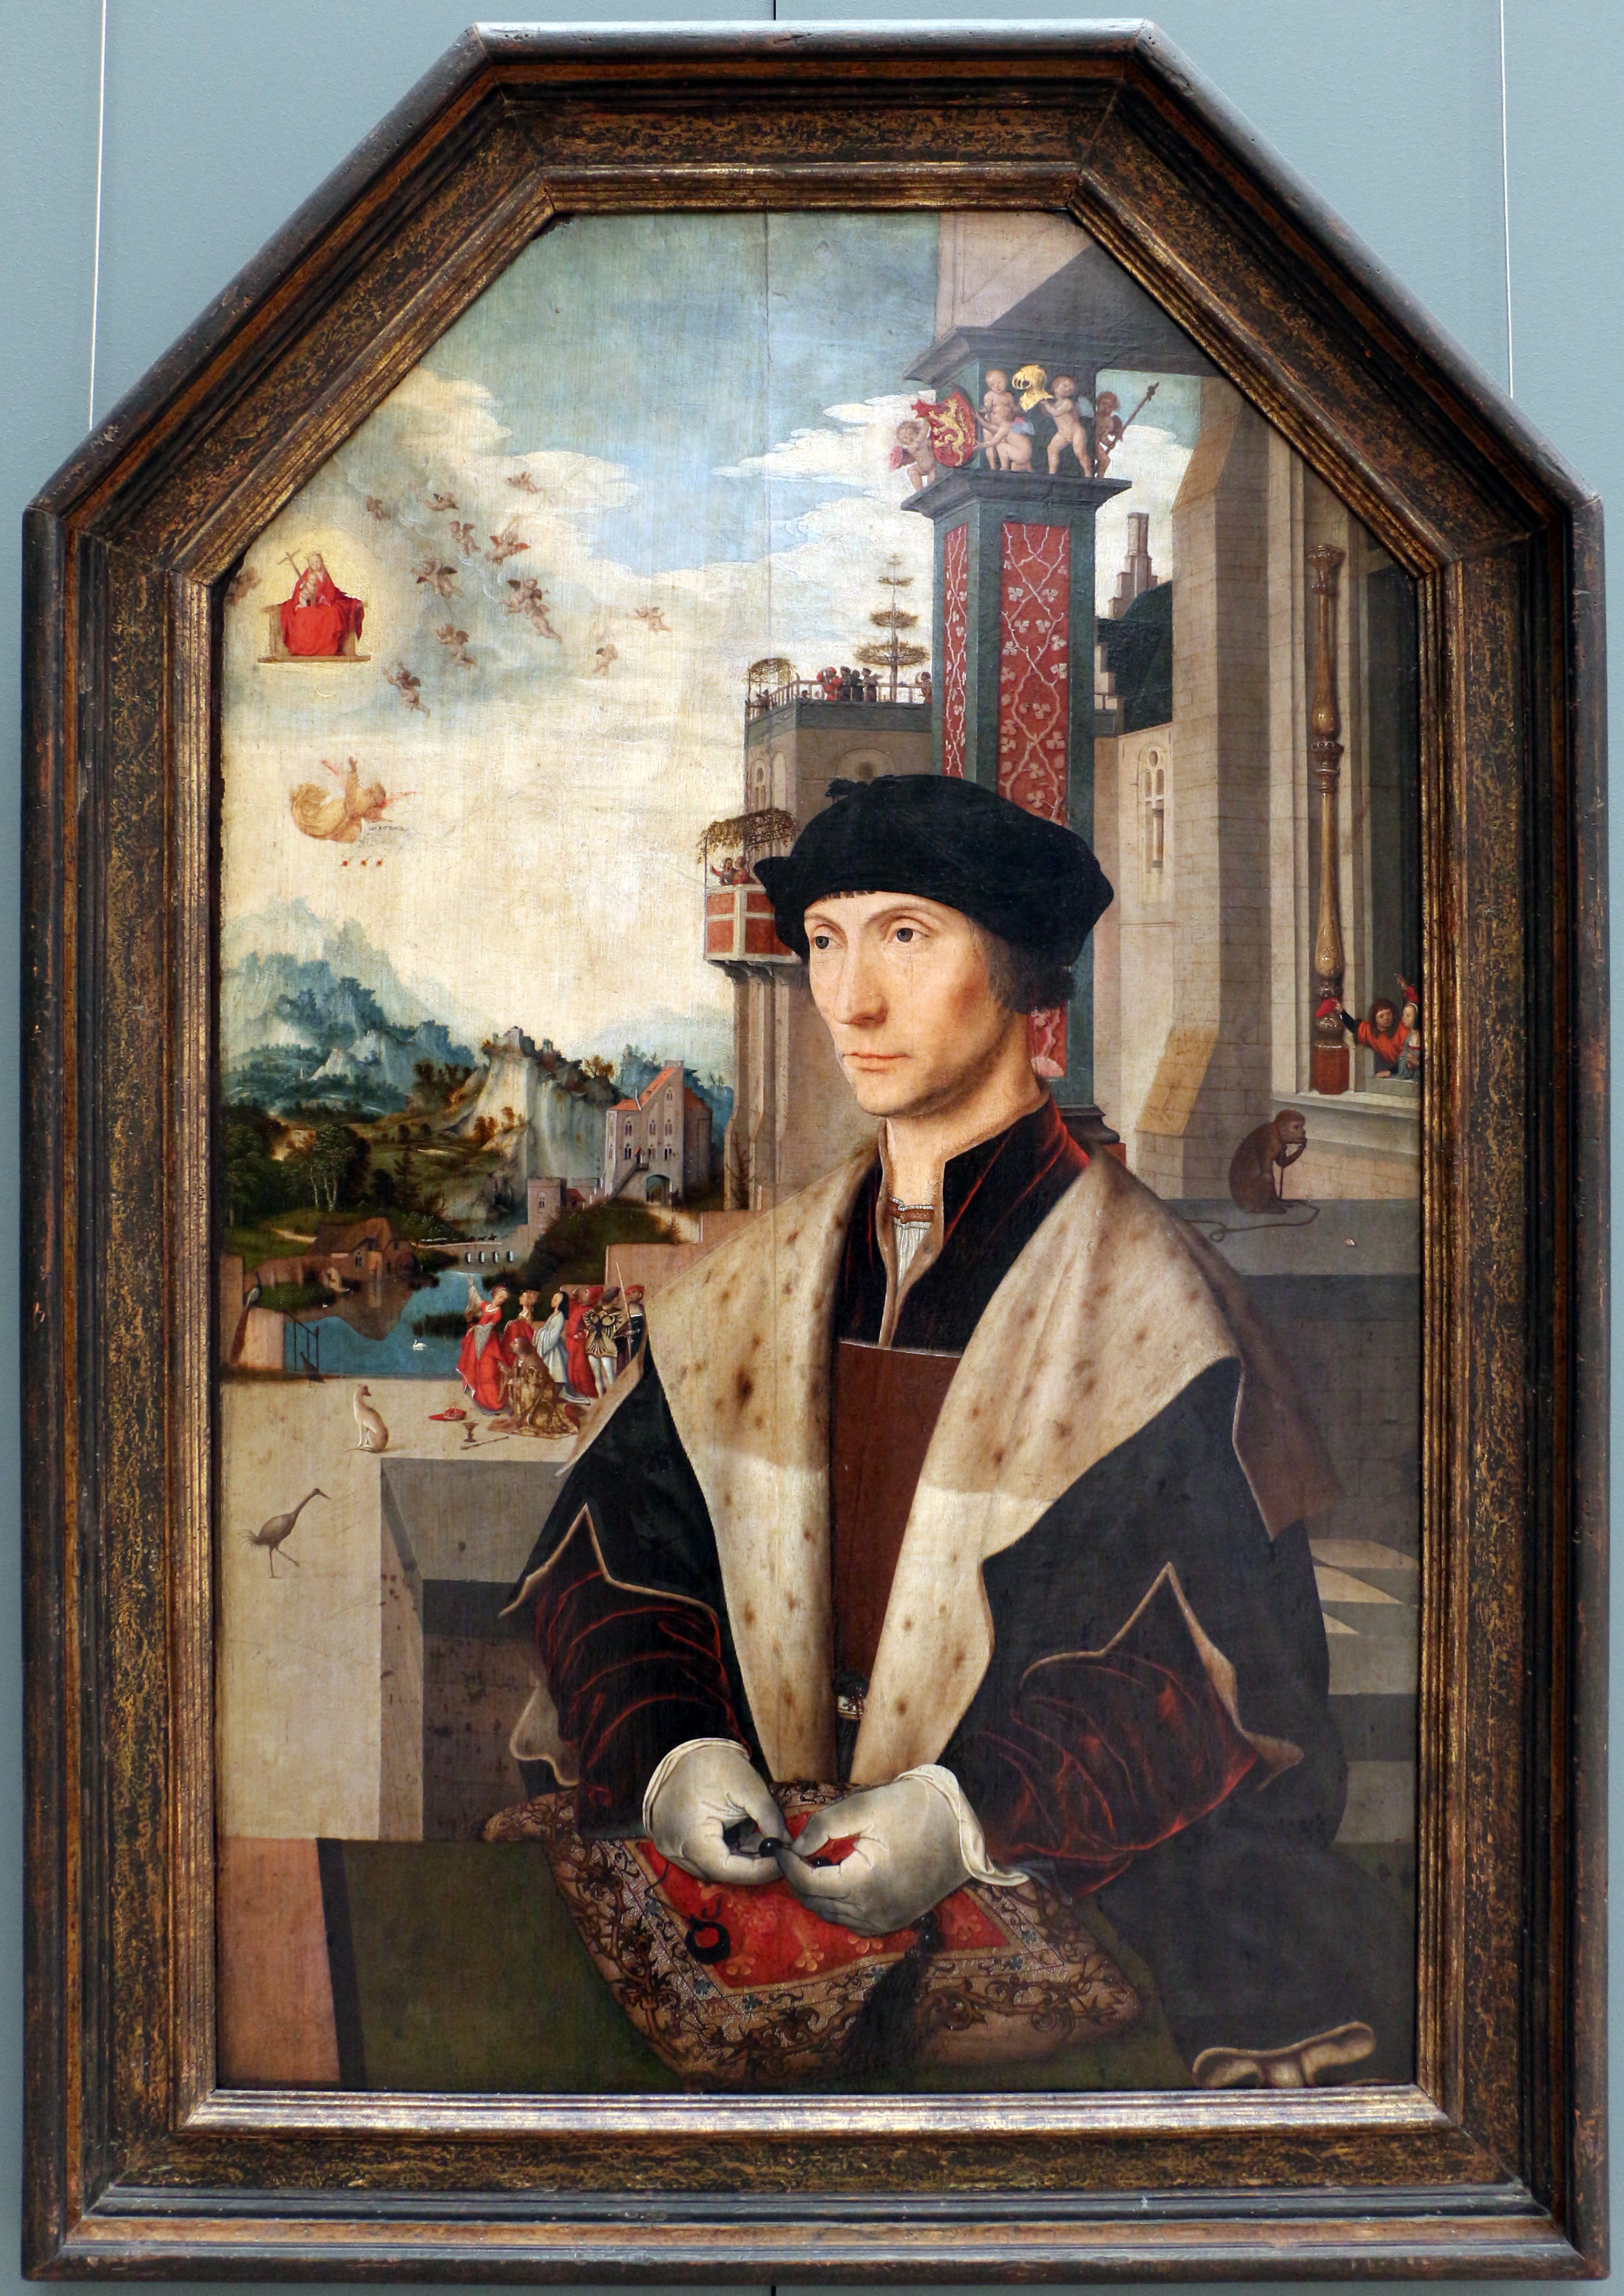 Jan_mostaert,_ritratto_del_cavaliere_abel_van_coustler,_post_1512,_Royal Museums of Fine Arts of Belgium